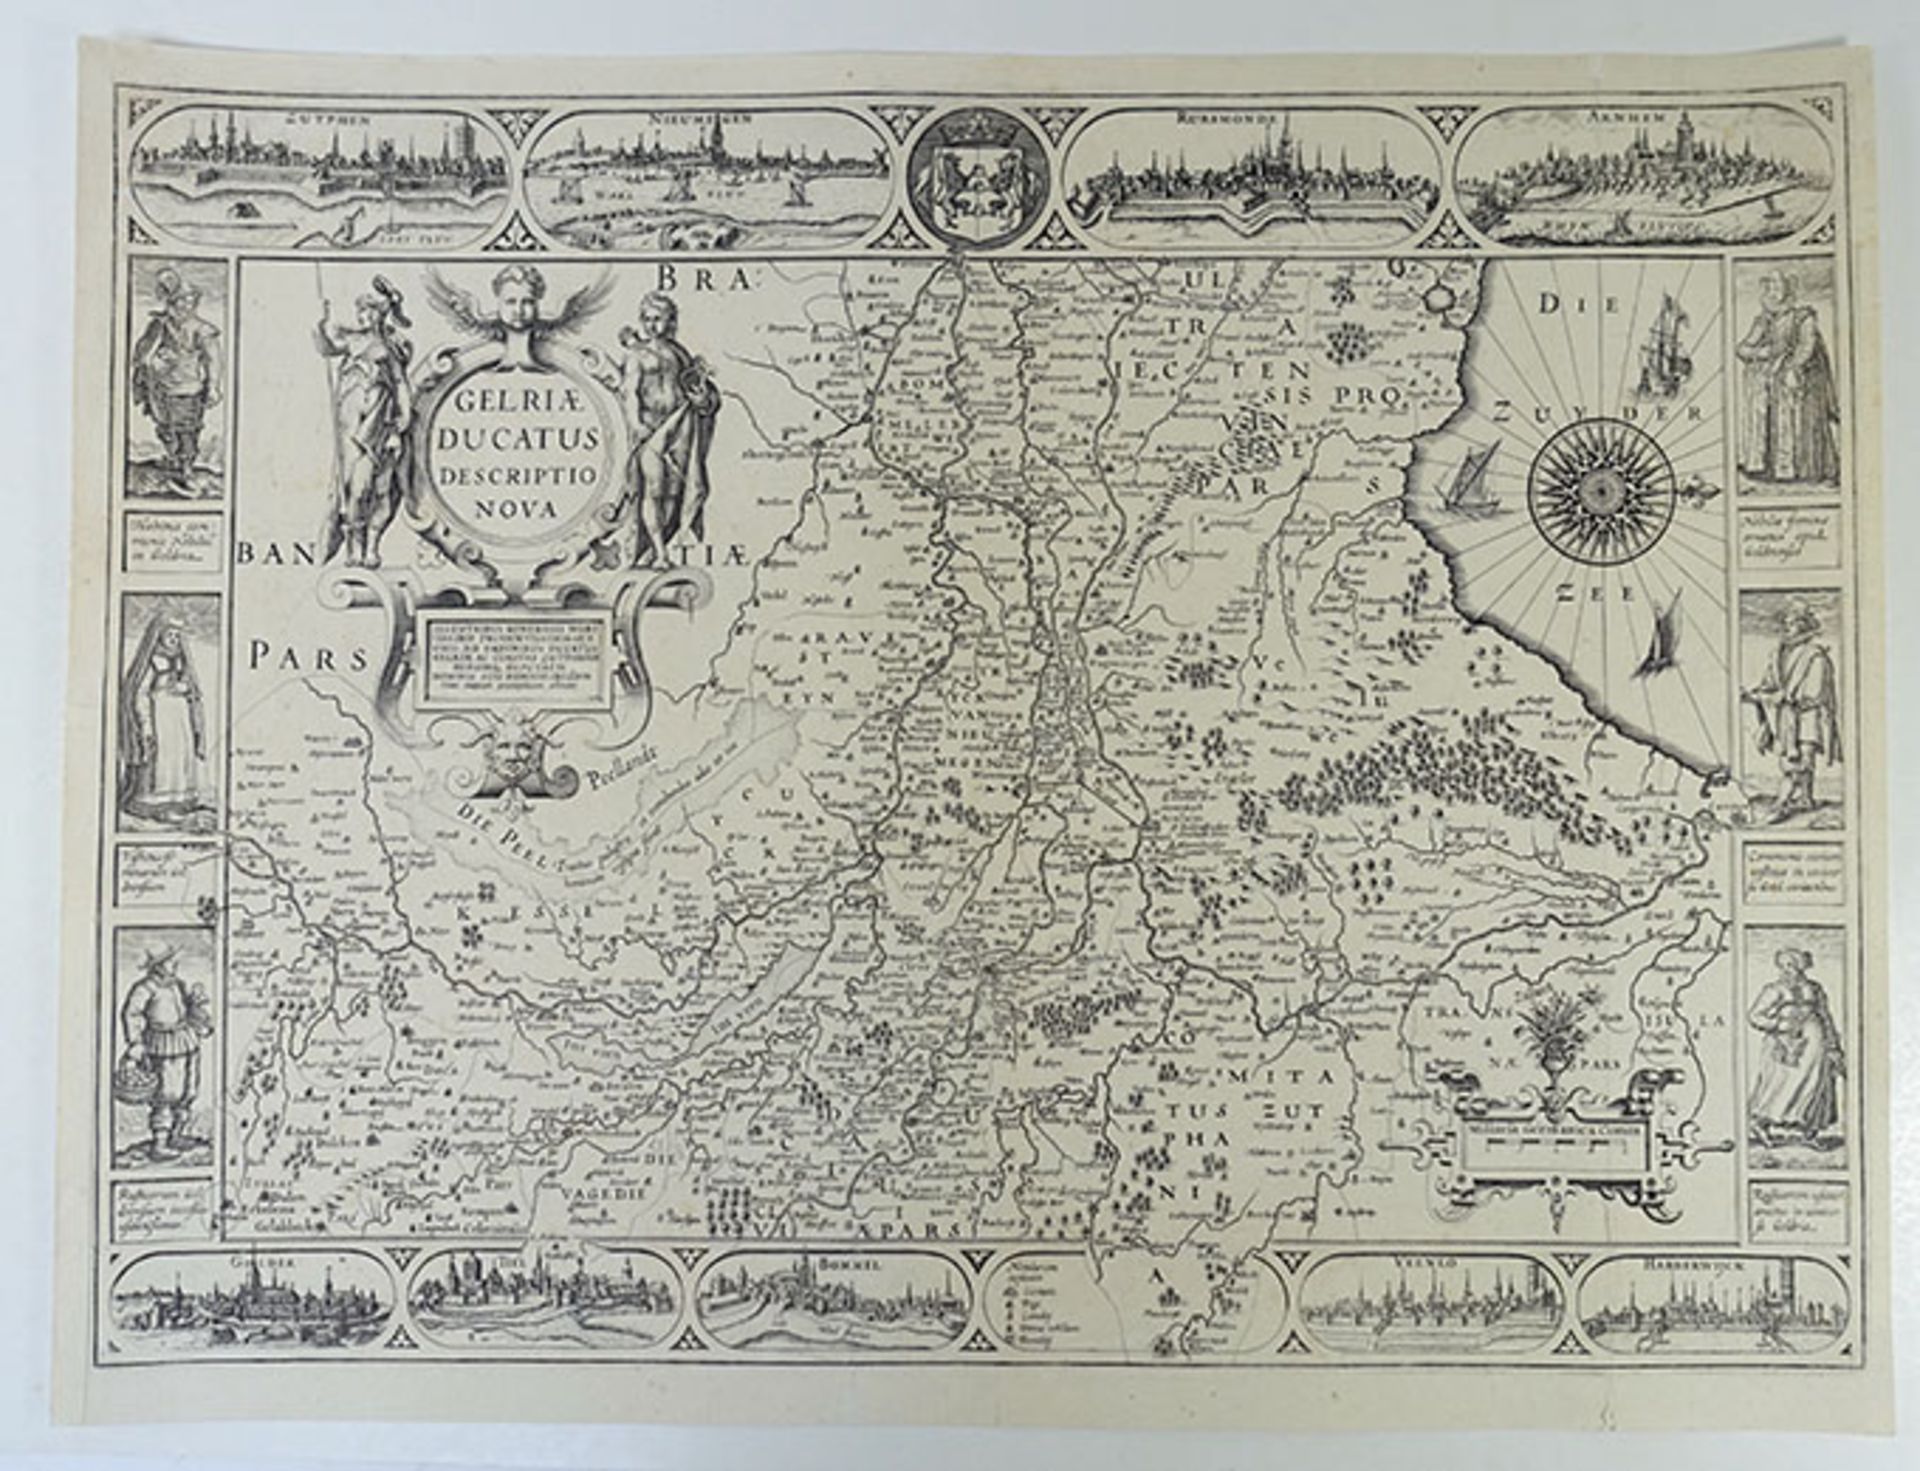 GELDERLAND -- "GELRIÆ DUCATUS DESCRIPTIO NOVA". (Amst., J. Hondius & J. Janssonius, after 1629).